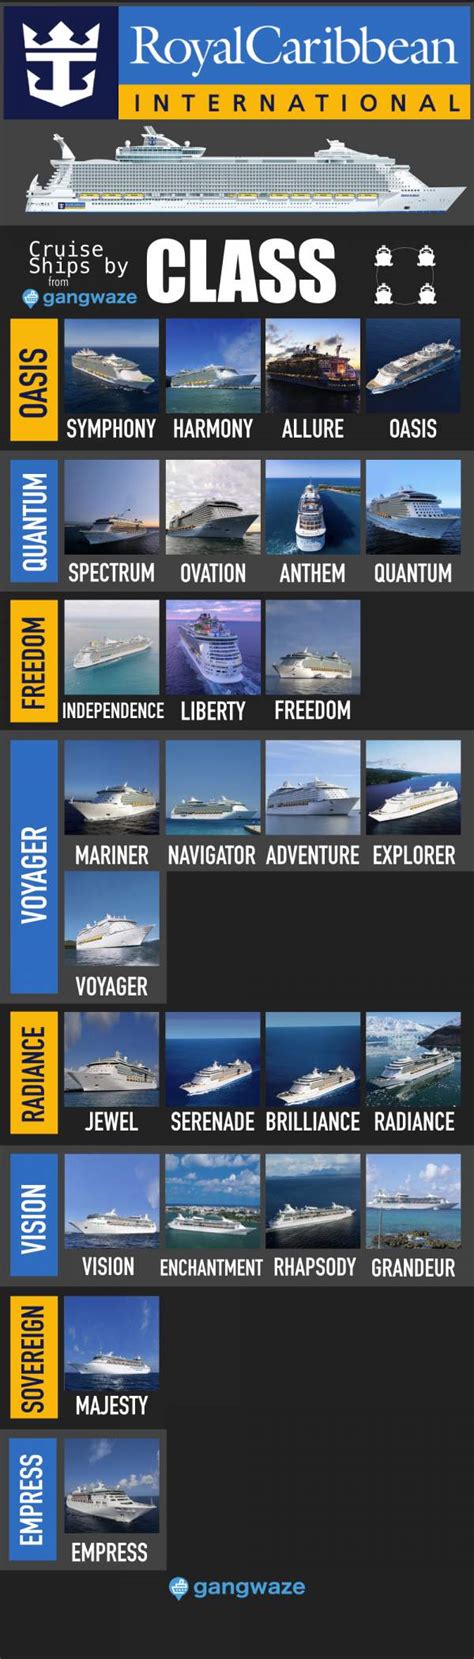 Royal Caribbean Ships By Class 2022 Including Ship Highlights